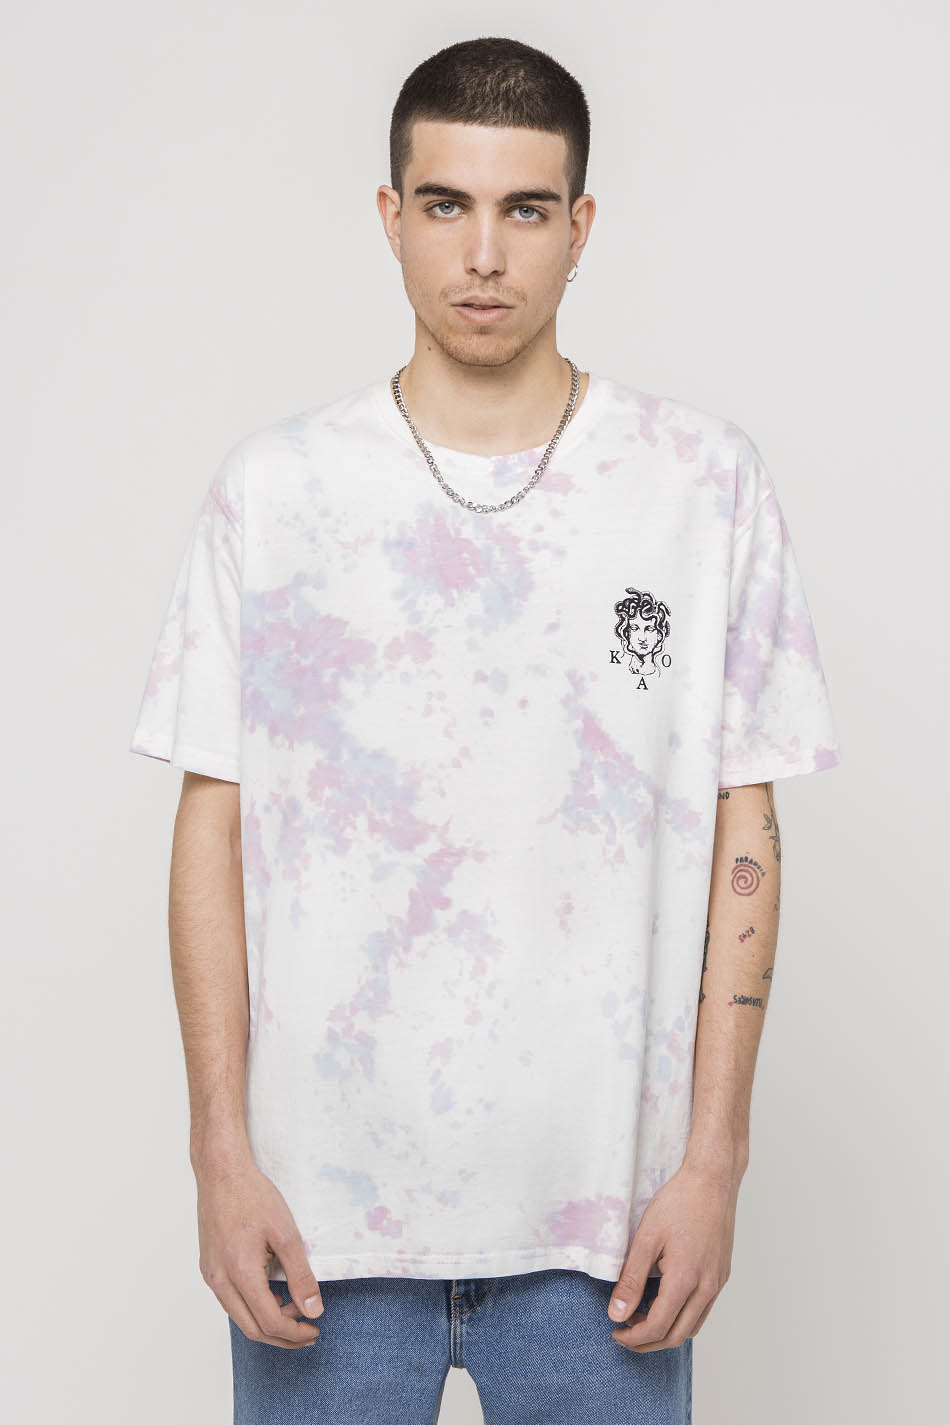 T-shirt Tie Dye Jellyfish